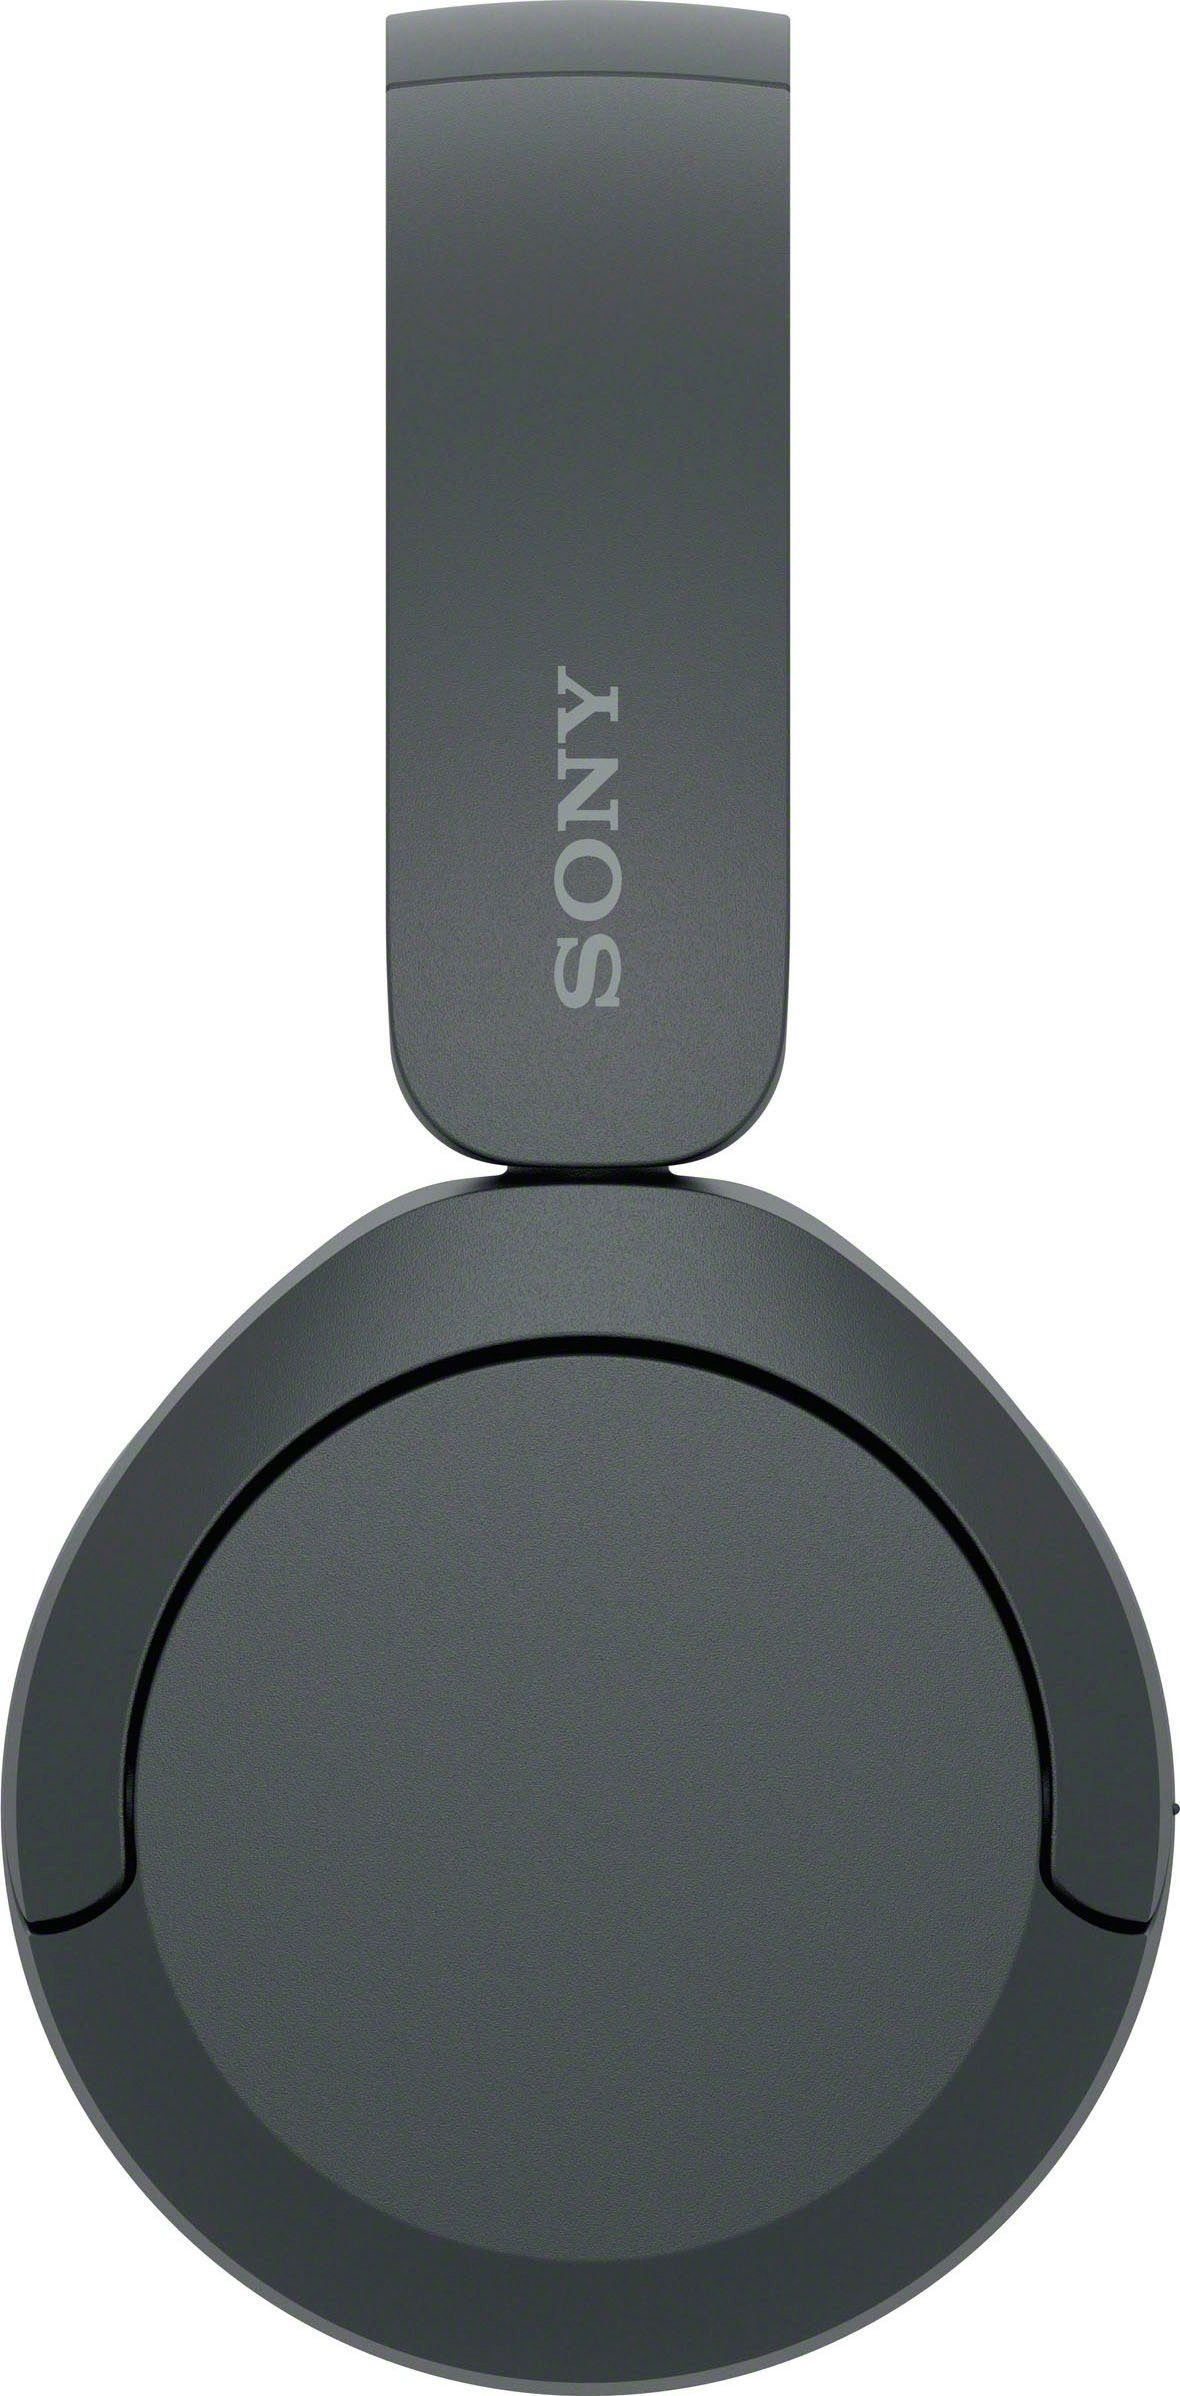 Schwarz Akkulaufzeit) (Freisprechfunktion, 50 Rauschunterdrückung, Bluetooth, Assistant, Std. WHCH520 Siri, Google On-Ear-Kopfhörer Sony